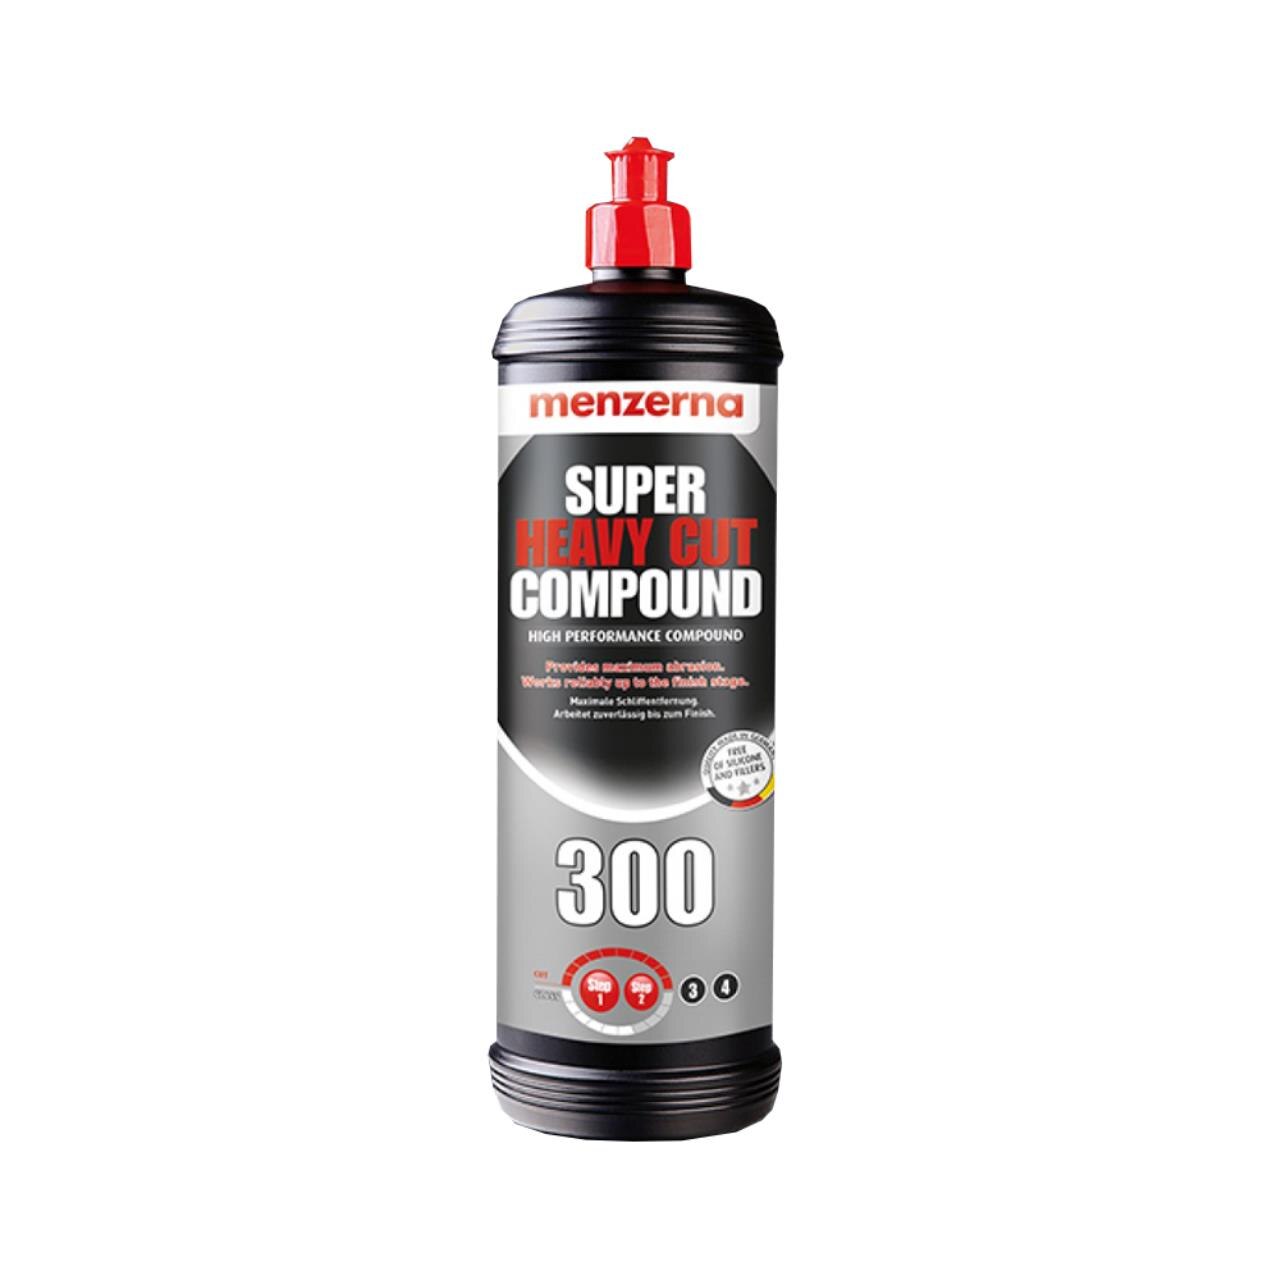 Super Heavy Cut Compound 300 - Универсальная высокоабразивная полировальная высокоабразивная полировальная паста heavy cut compound 1000 1 кг menzerna 22984 260 870